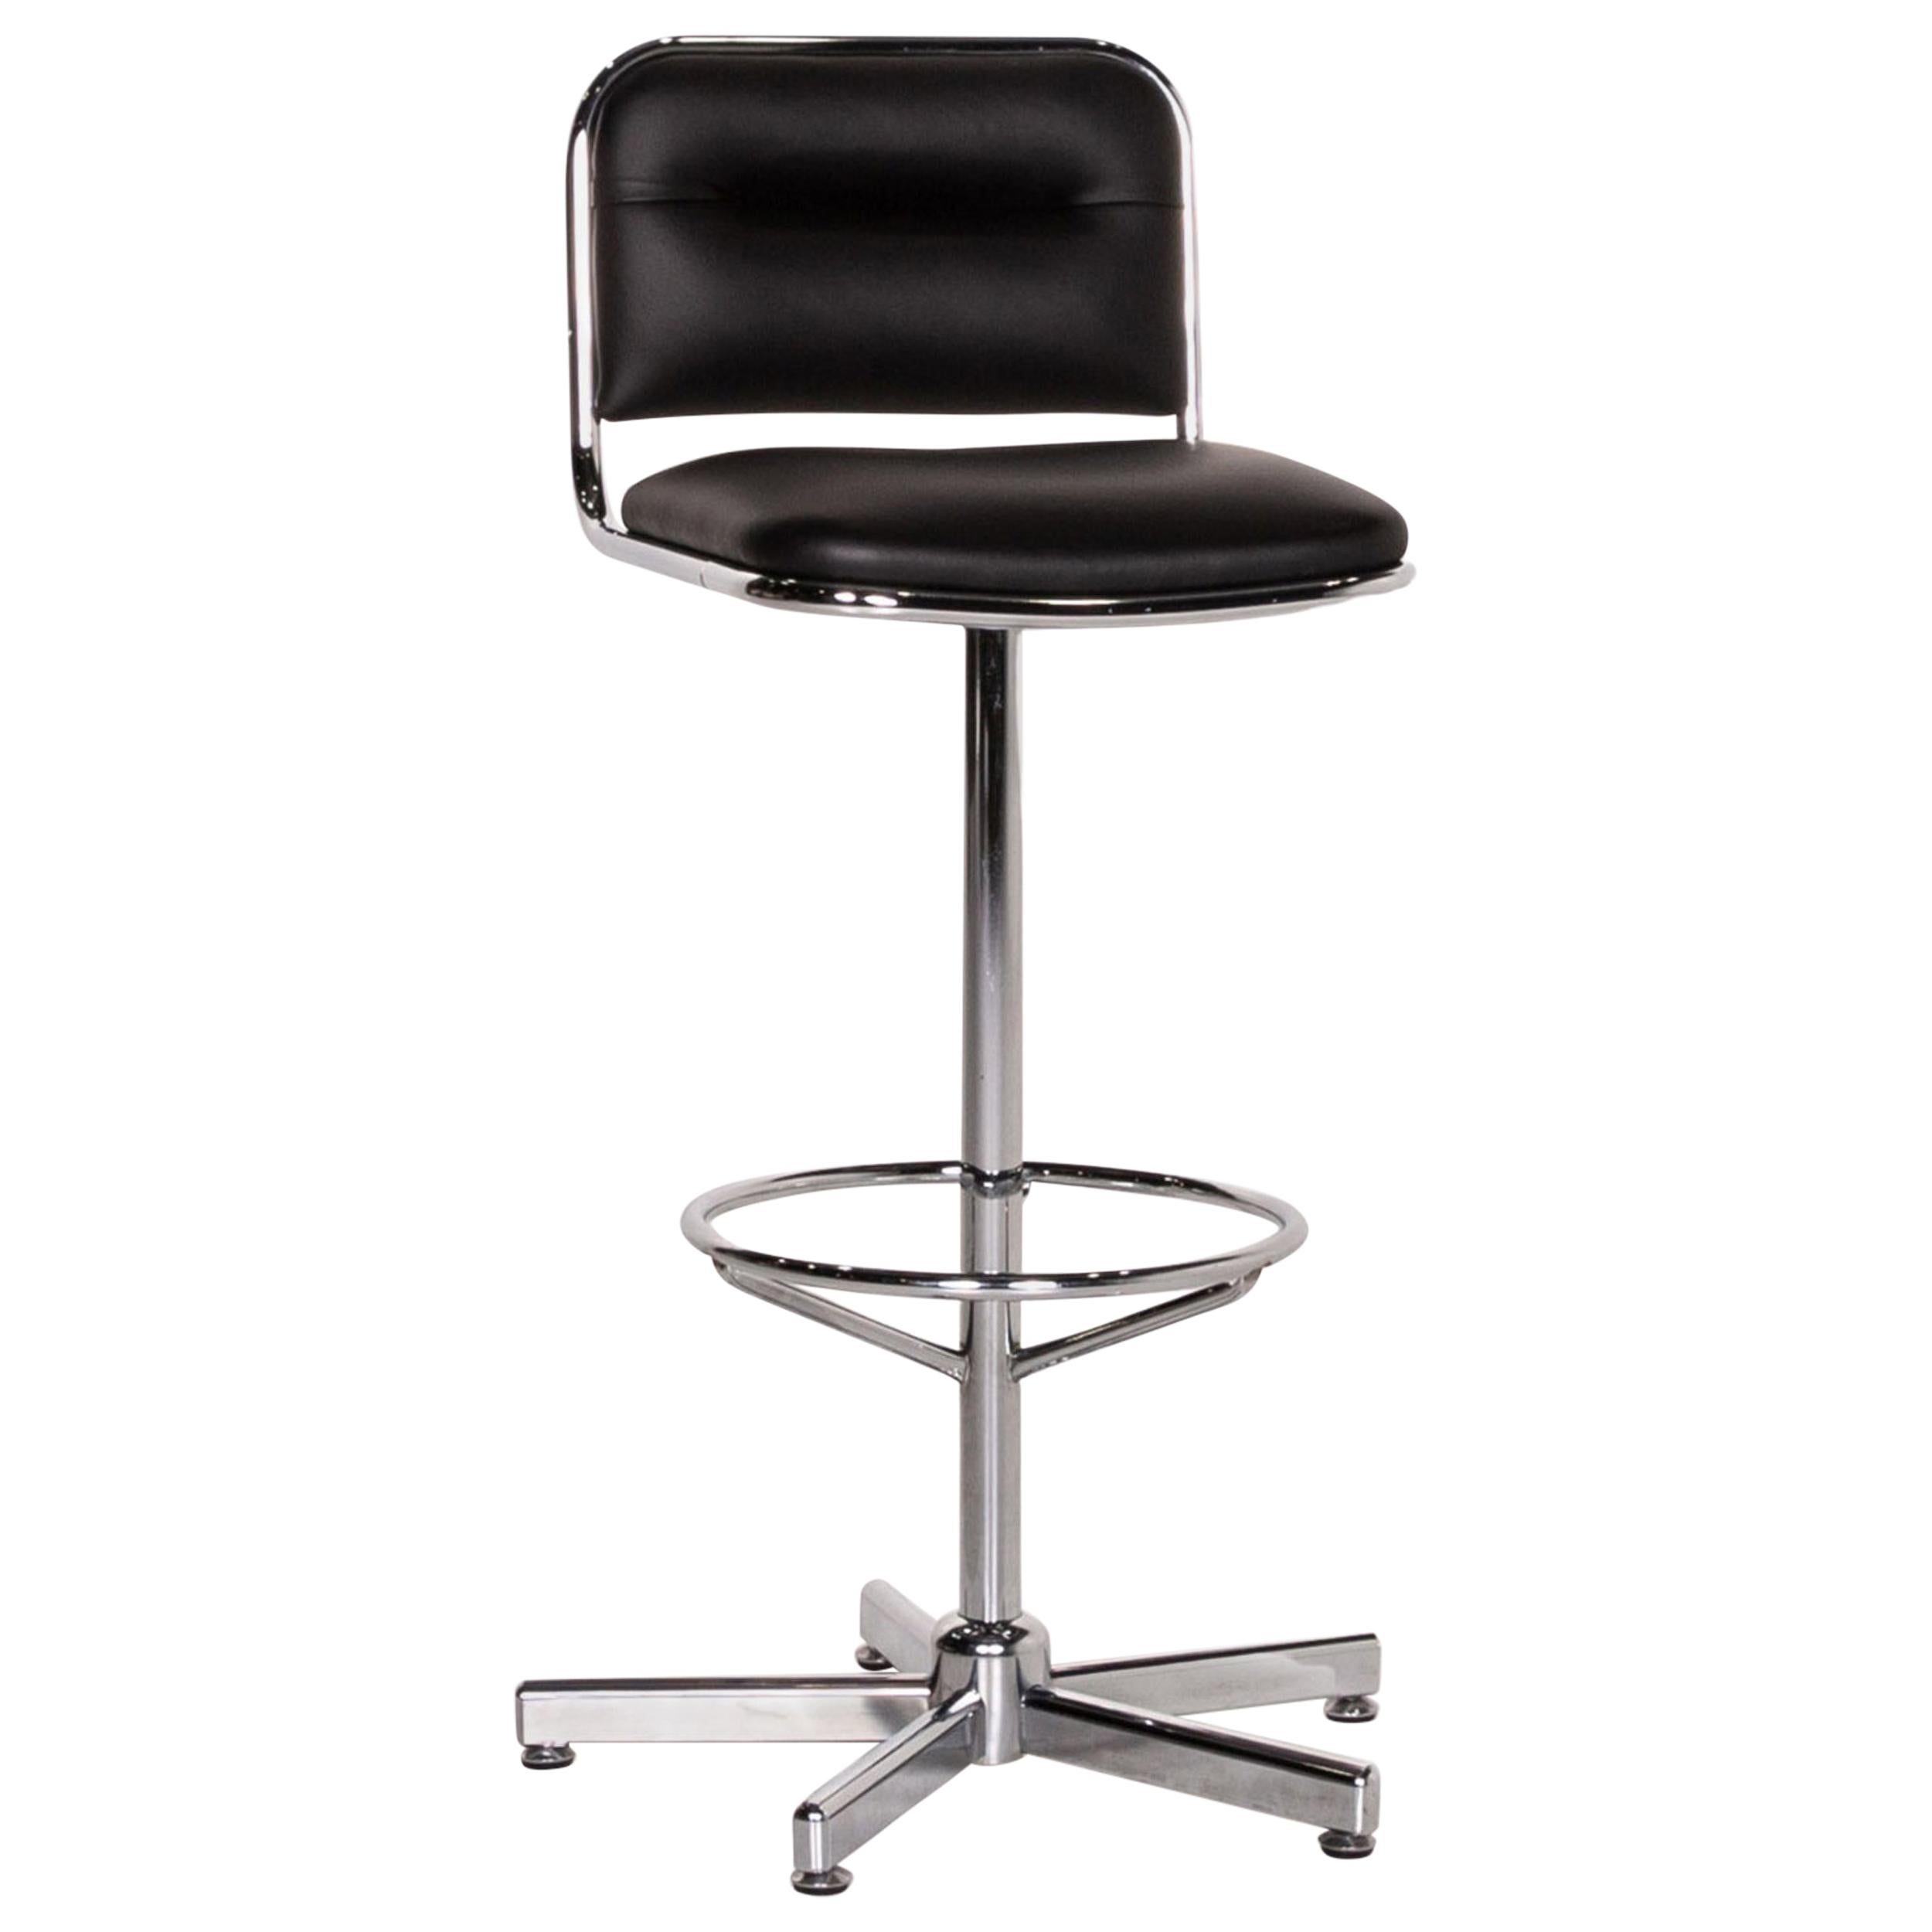 Thonet Leather Bar Stool Black Chair Metal